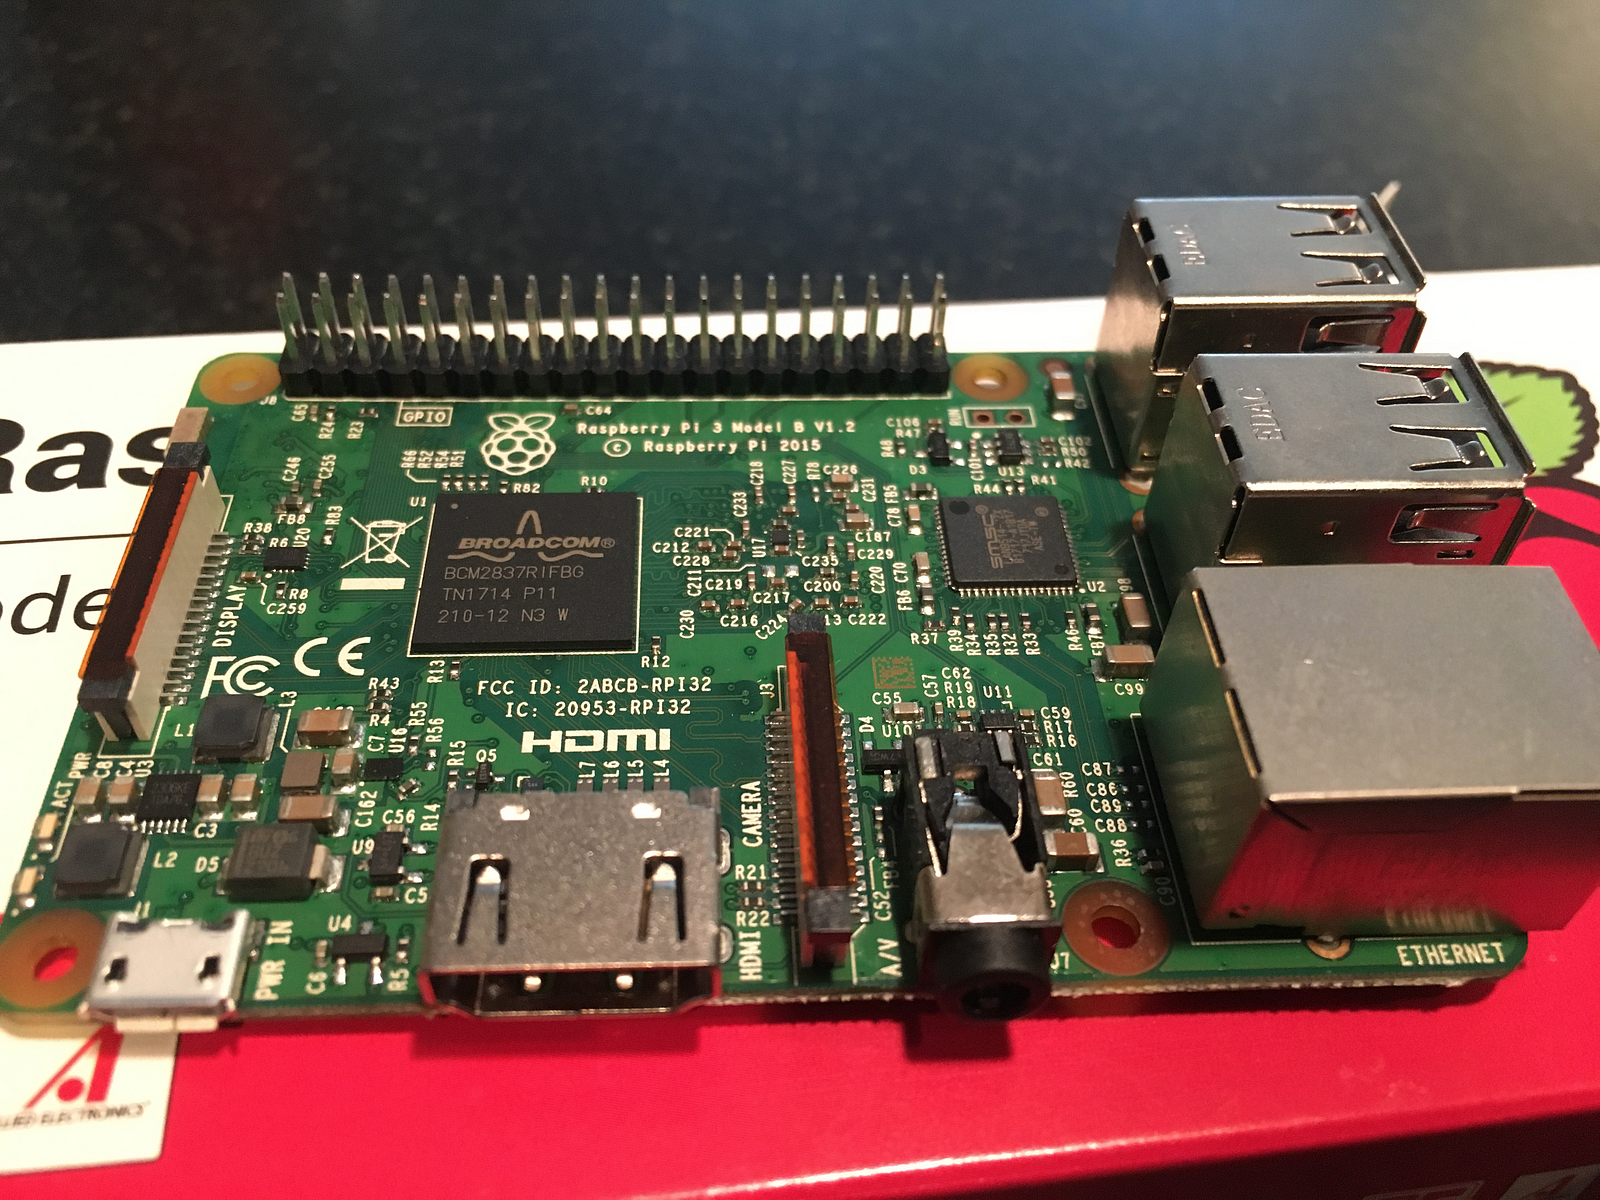 Meet the Raspberry Pi 3 Model B+